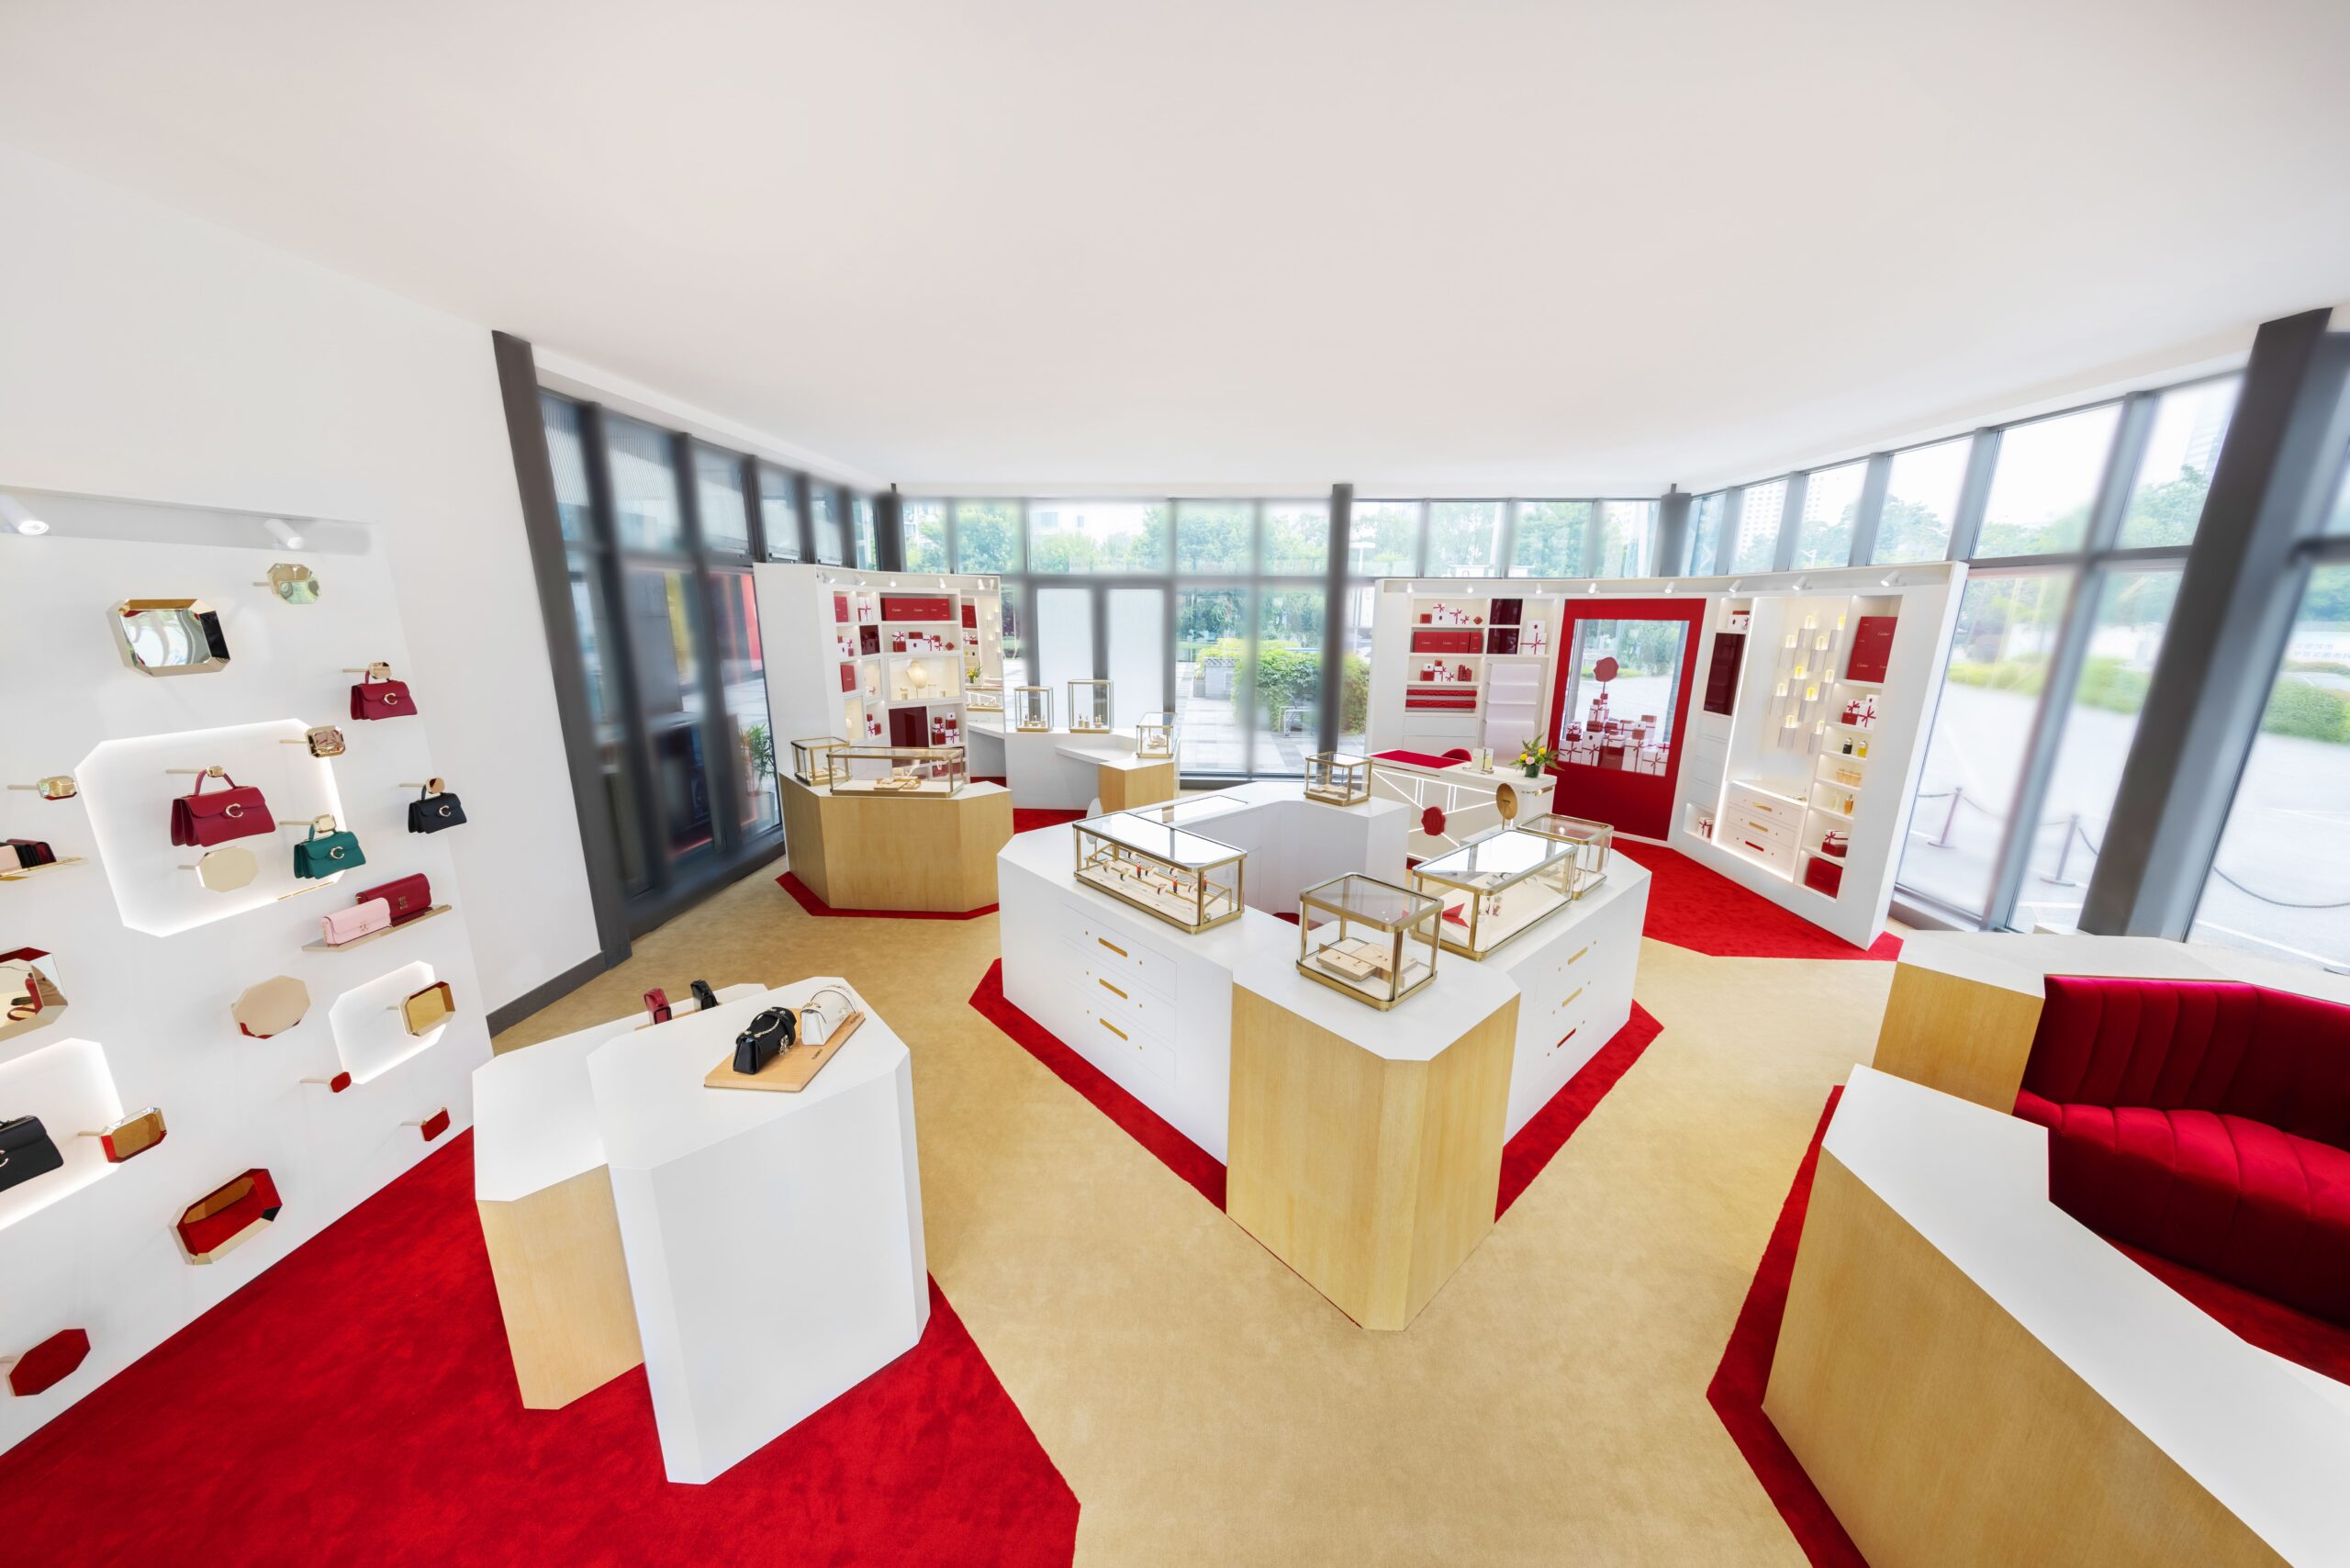 Cartier Gifting Pop-up July – August Kunming Qingdao Nanning